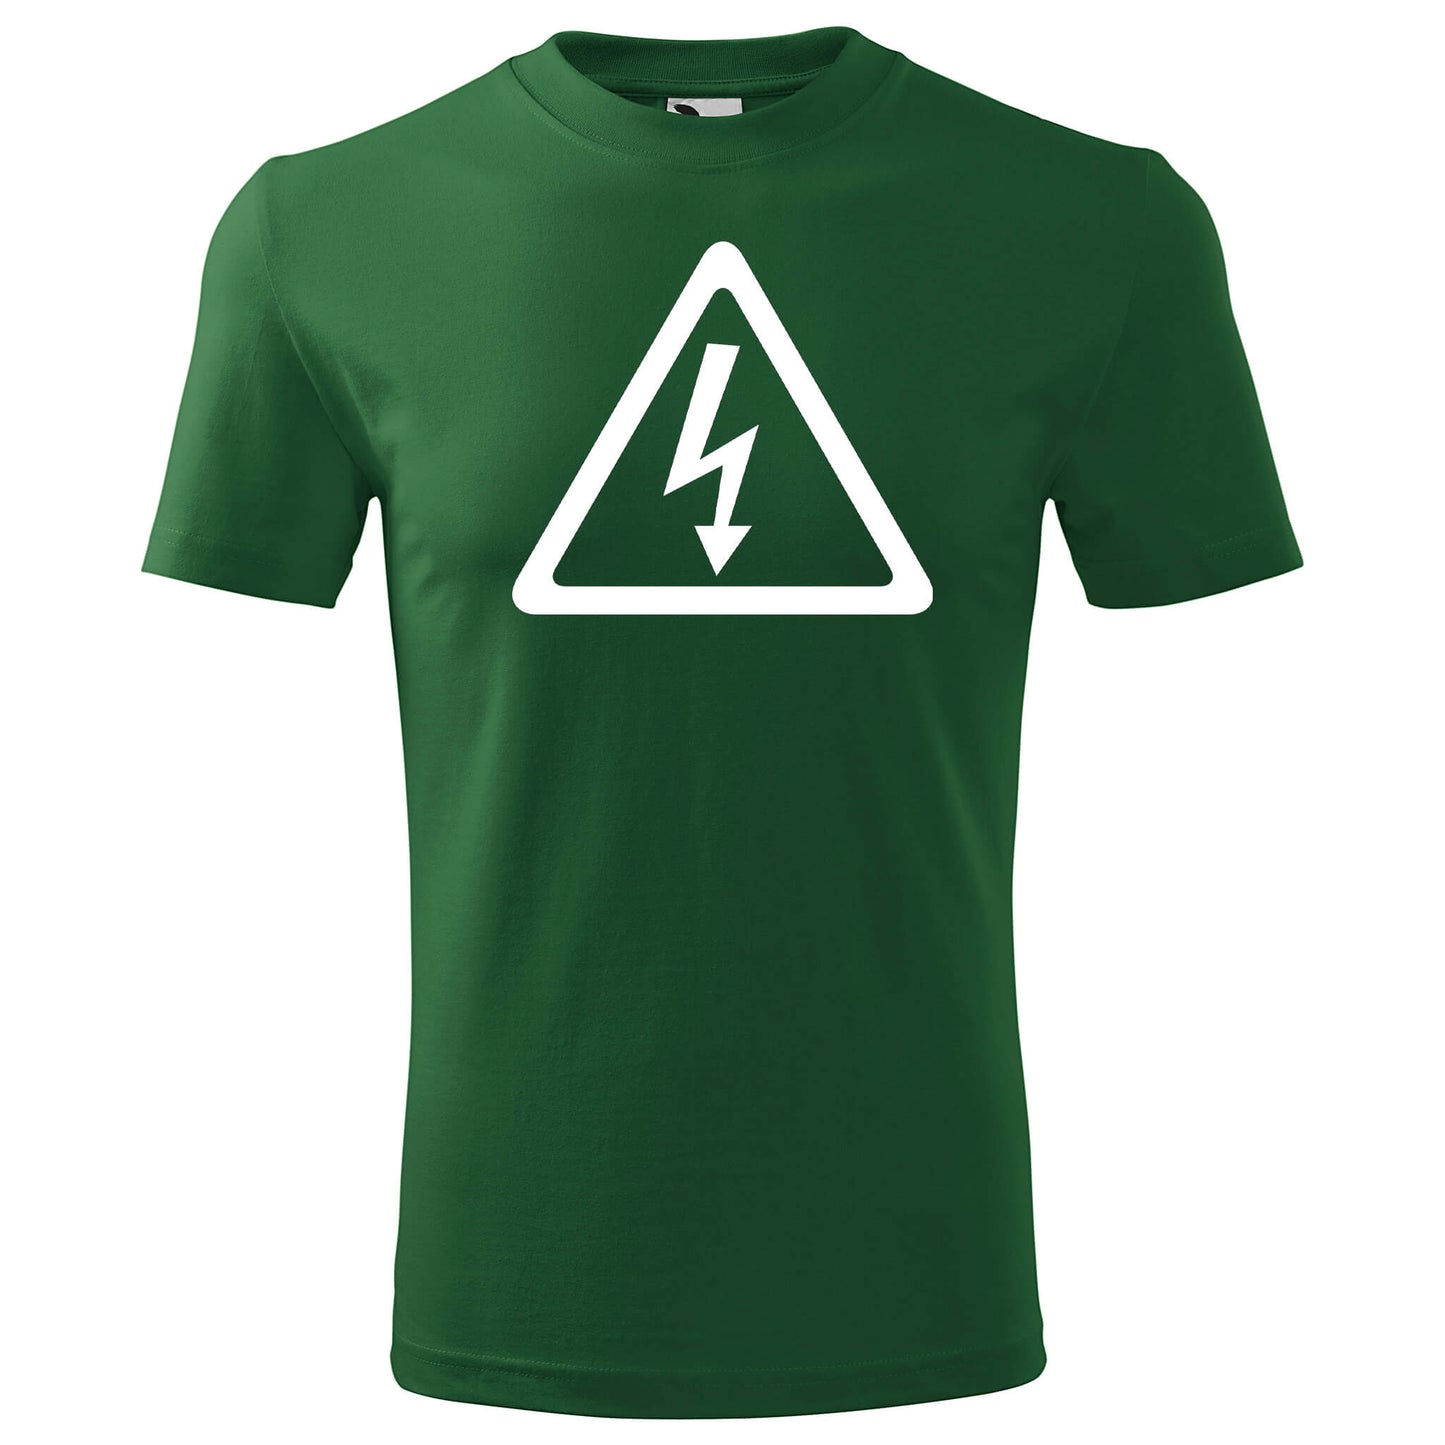 T-shirt - High voltage - rvdesignprint